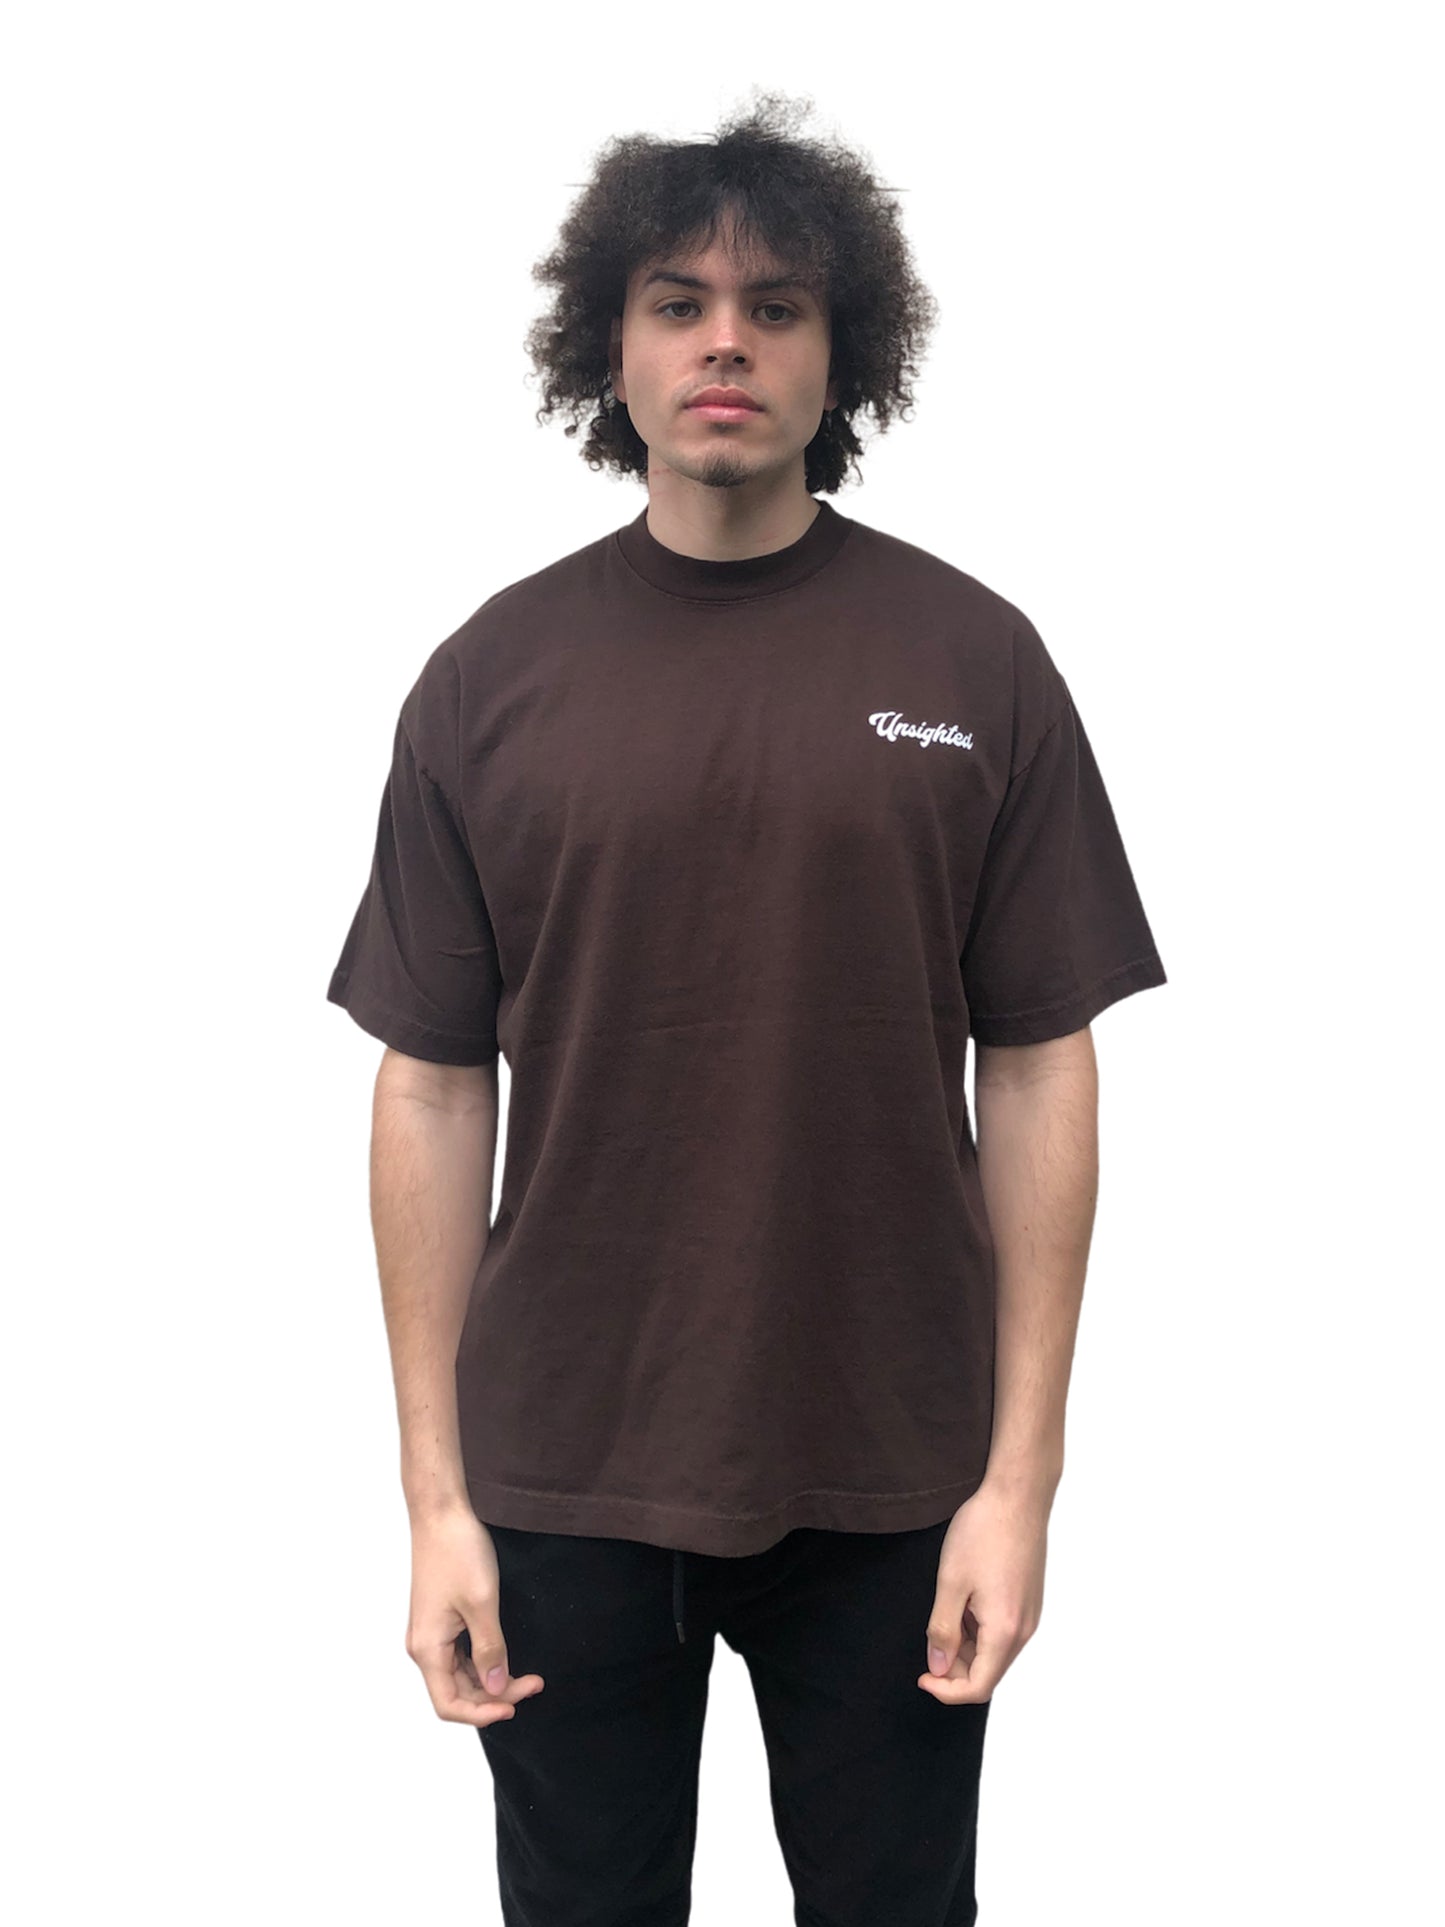 Brown Star T-Shirt